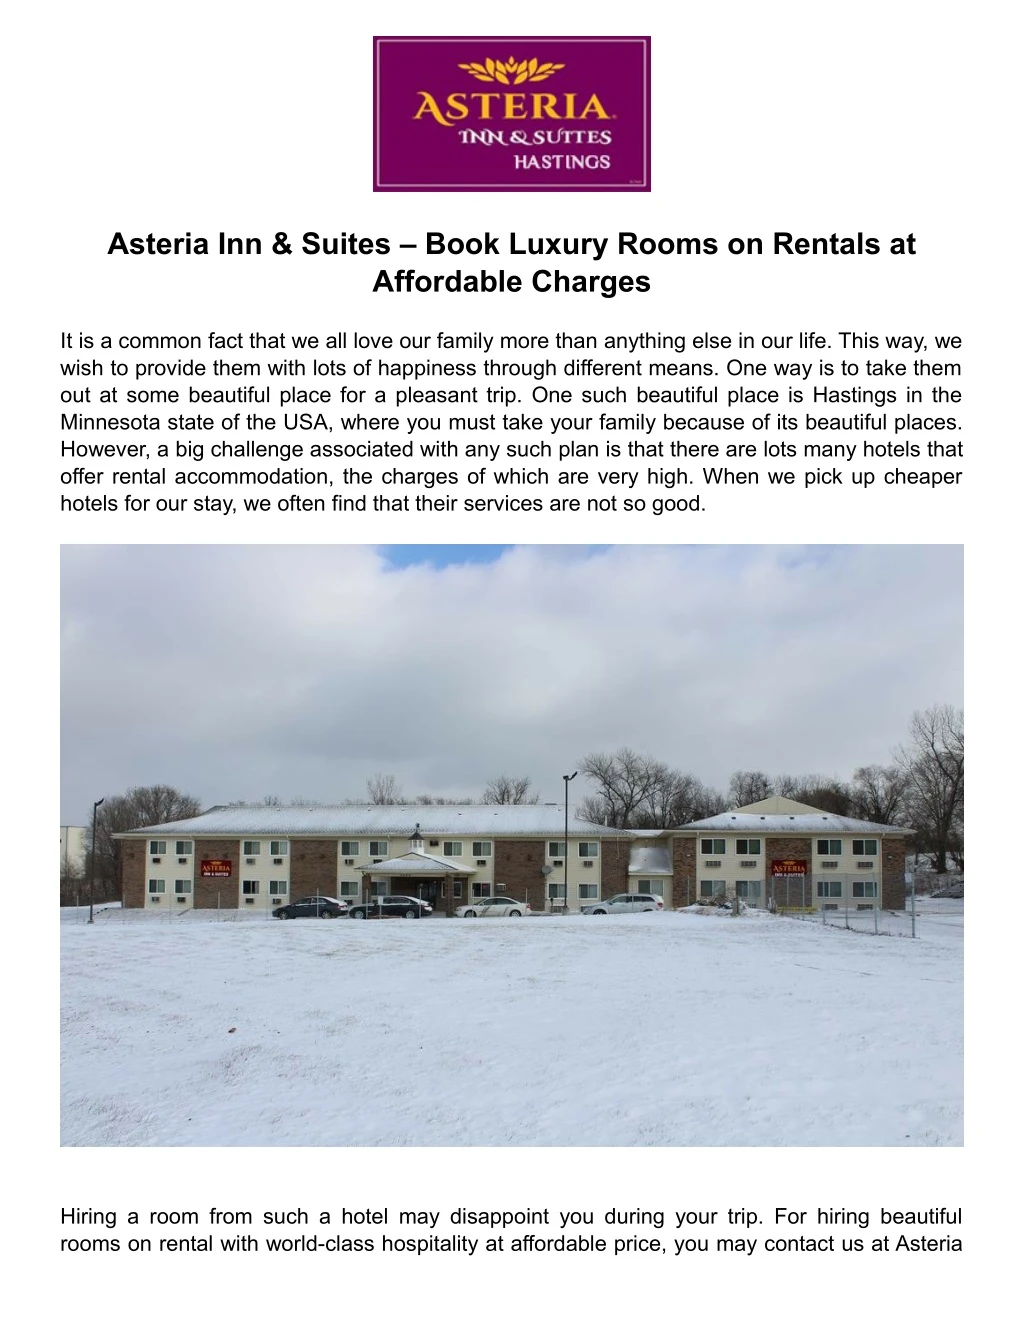 asteria inn suites book luxury rooms on rentals